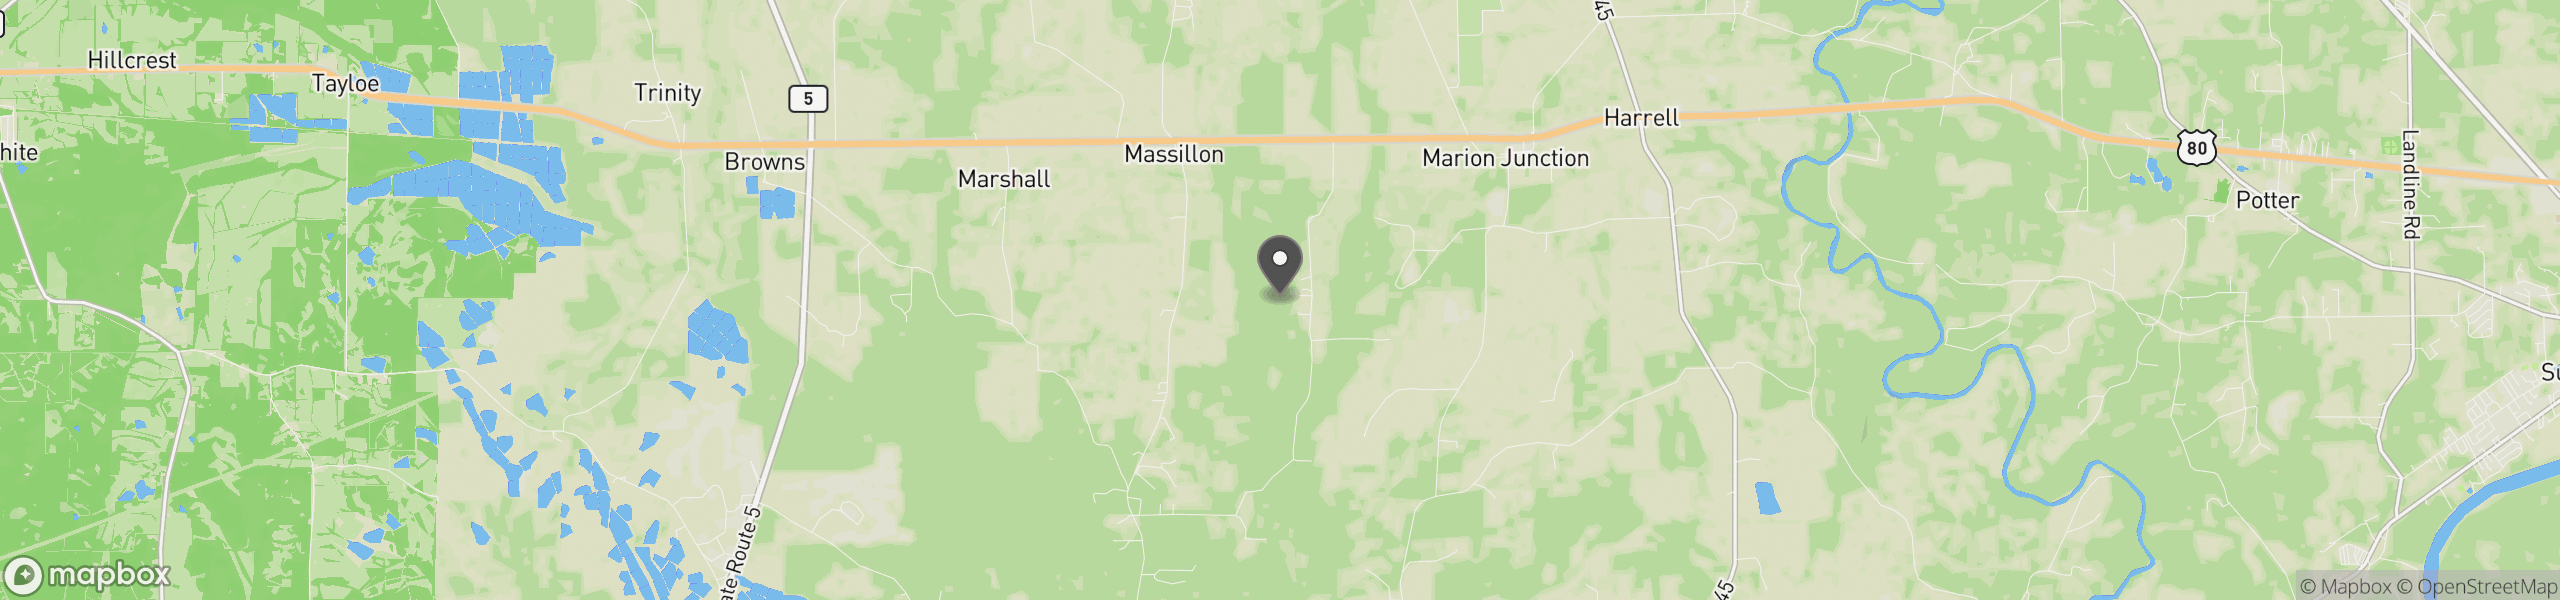 Marion Junction, AL 36759